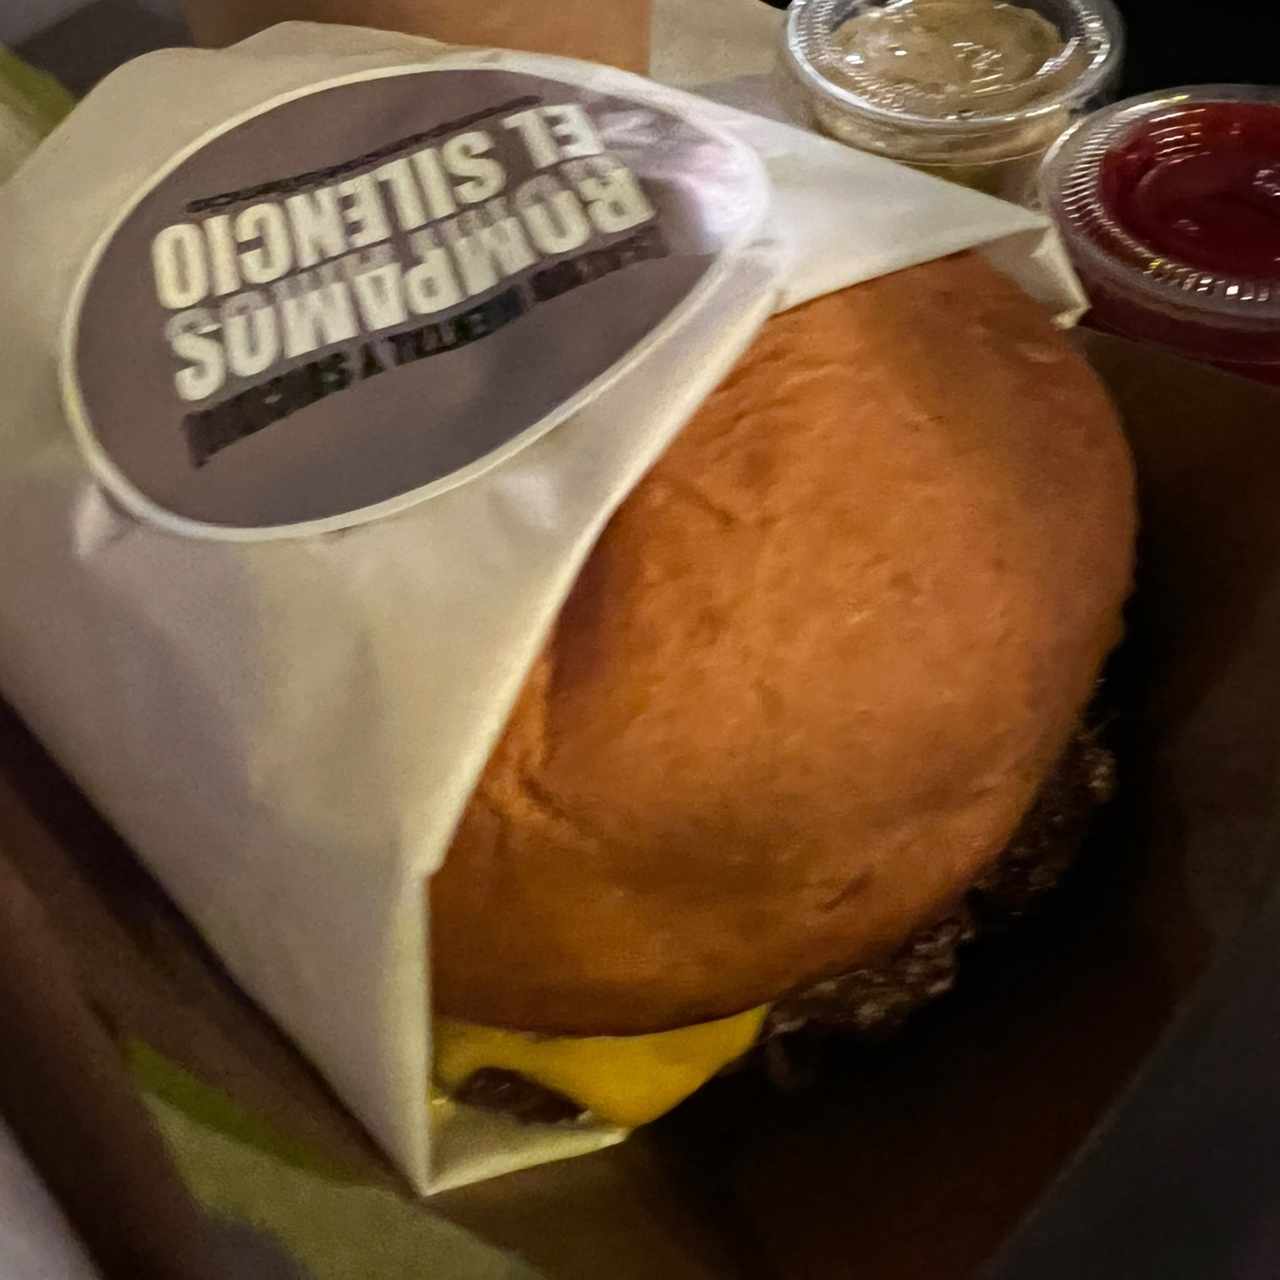 Oklahoma Burger